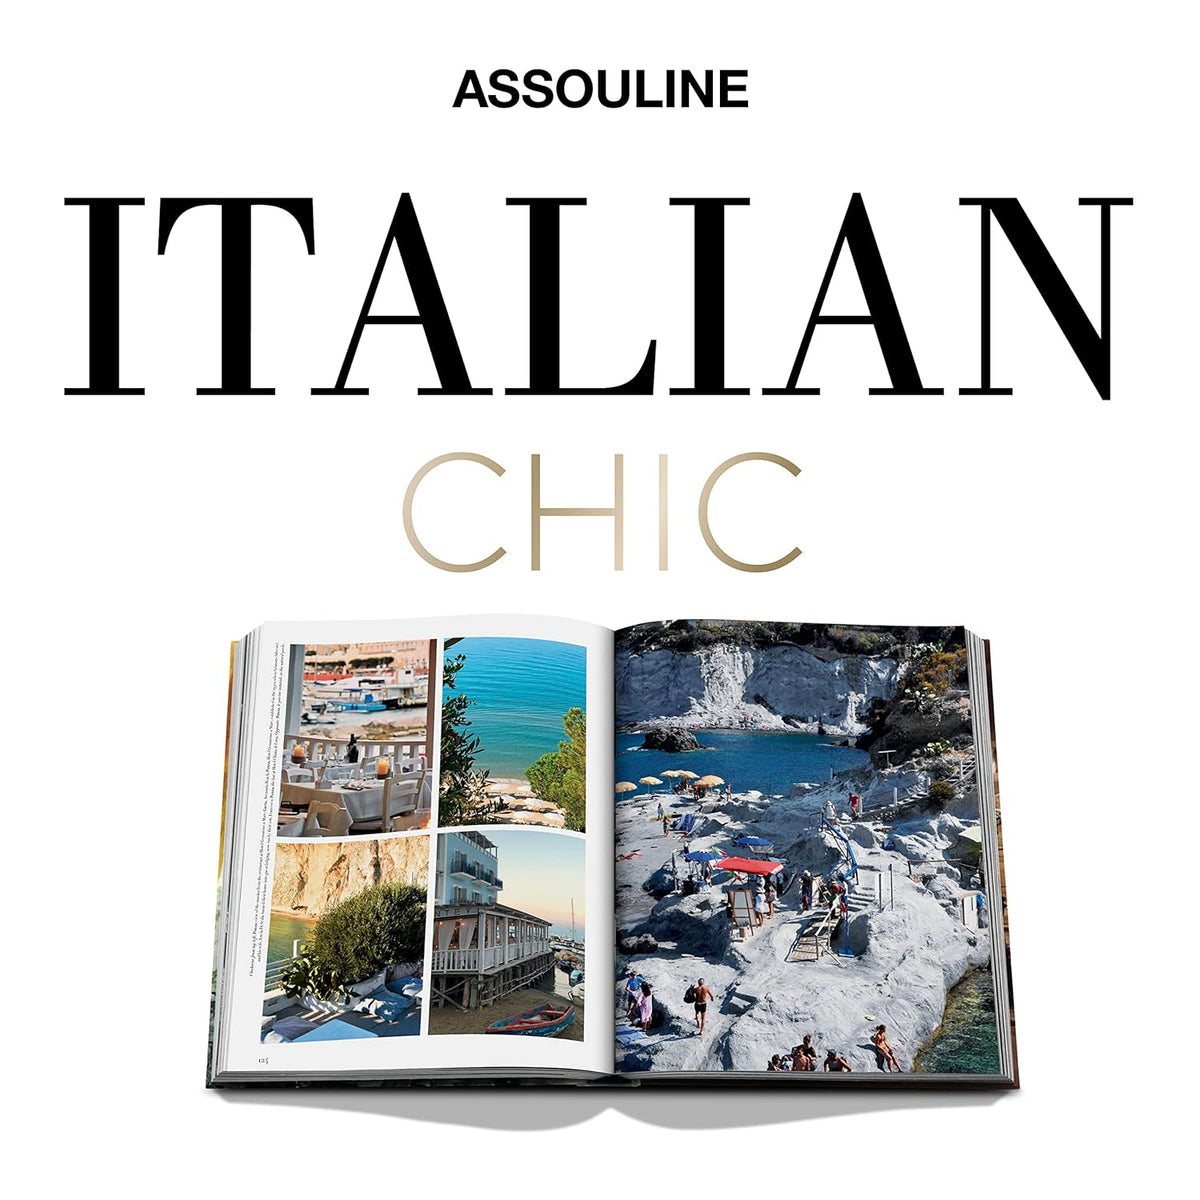 Italian Chic - Assouline coffee table book